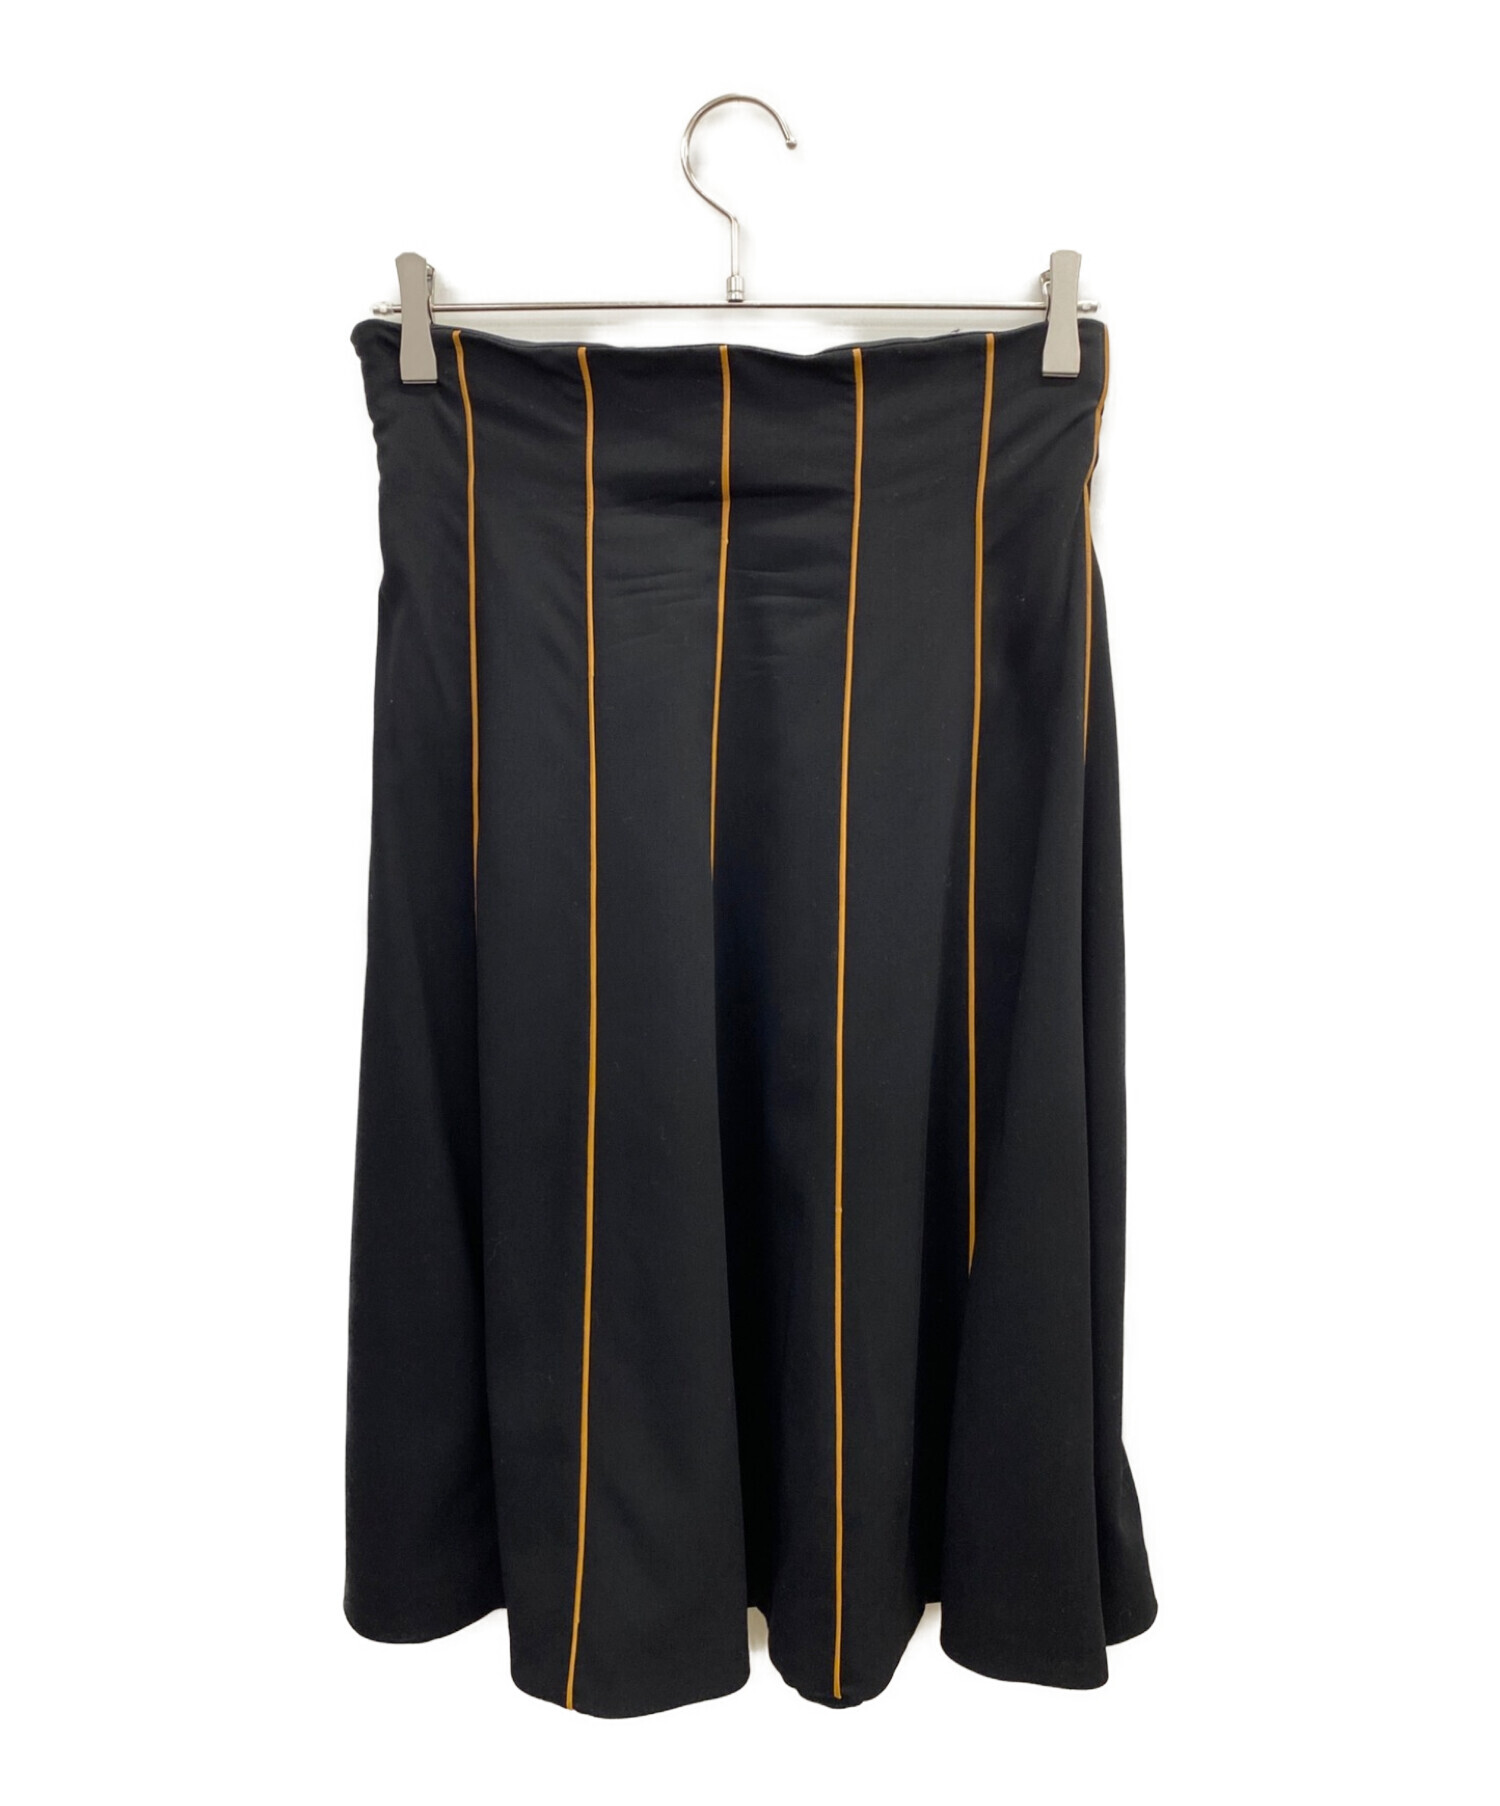 【HERMES】カシミア100%スカート 38sizeサイズ38サイズ